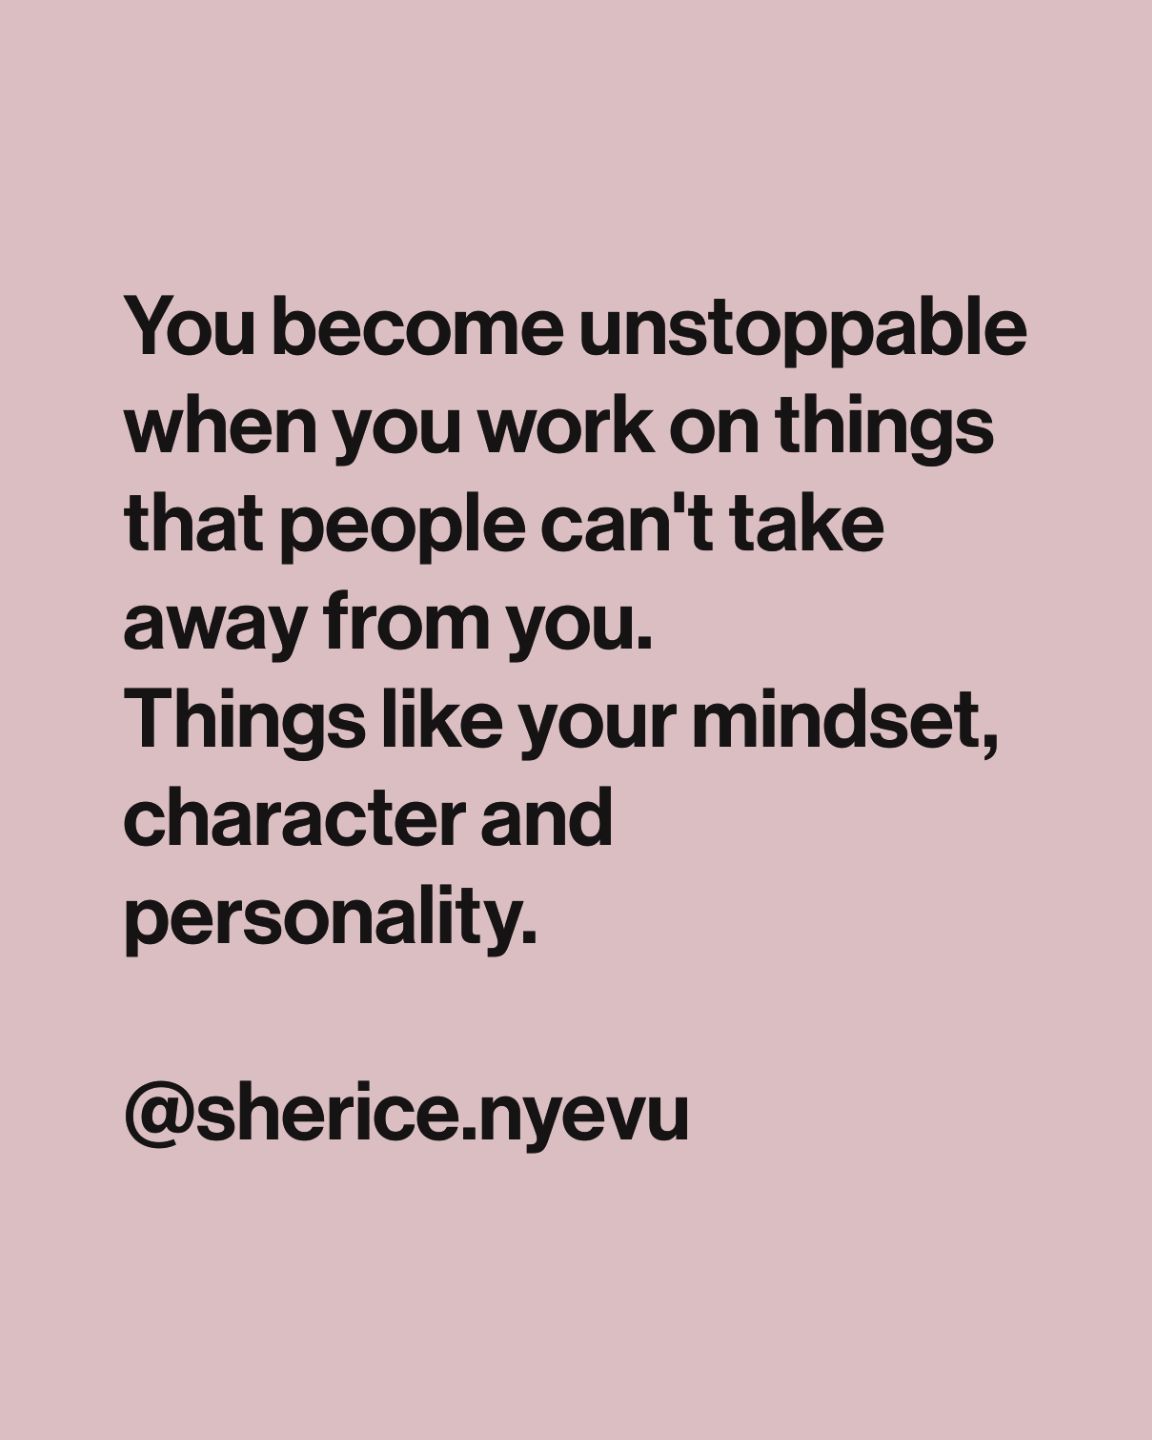 Sherice Nyevu on LinkedIn: #unstoppable #mindset #character #personality